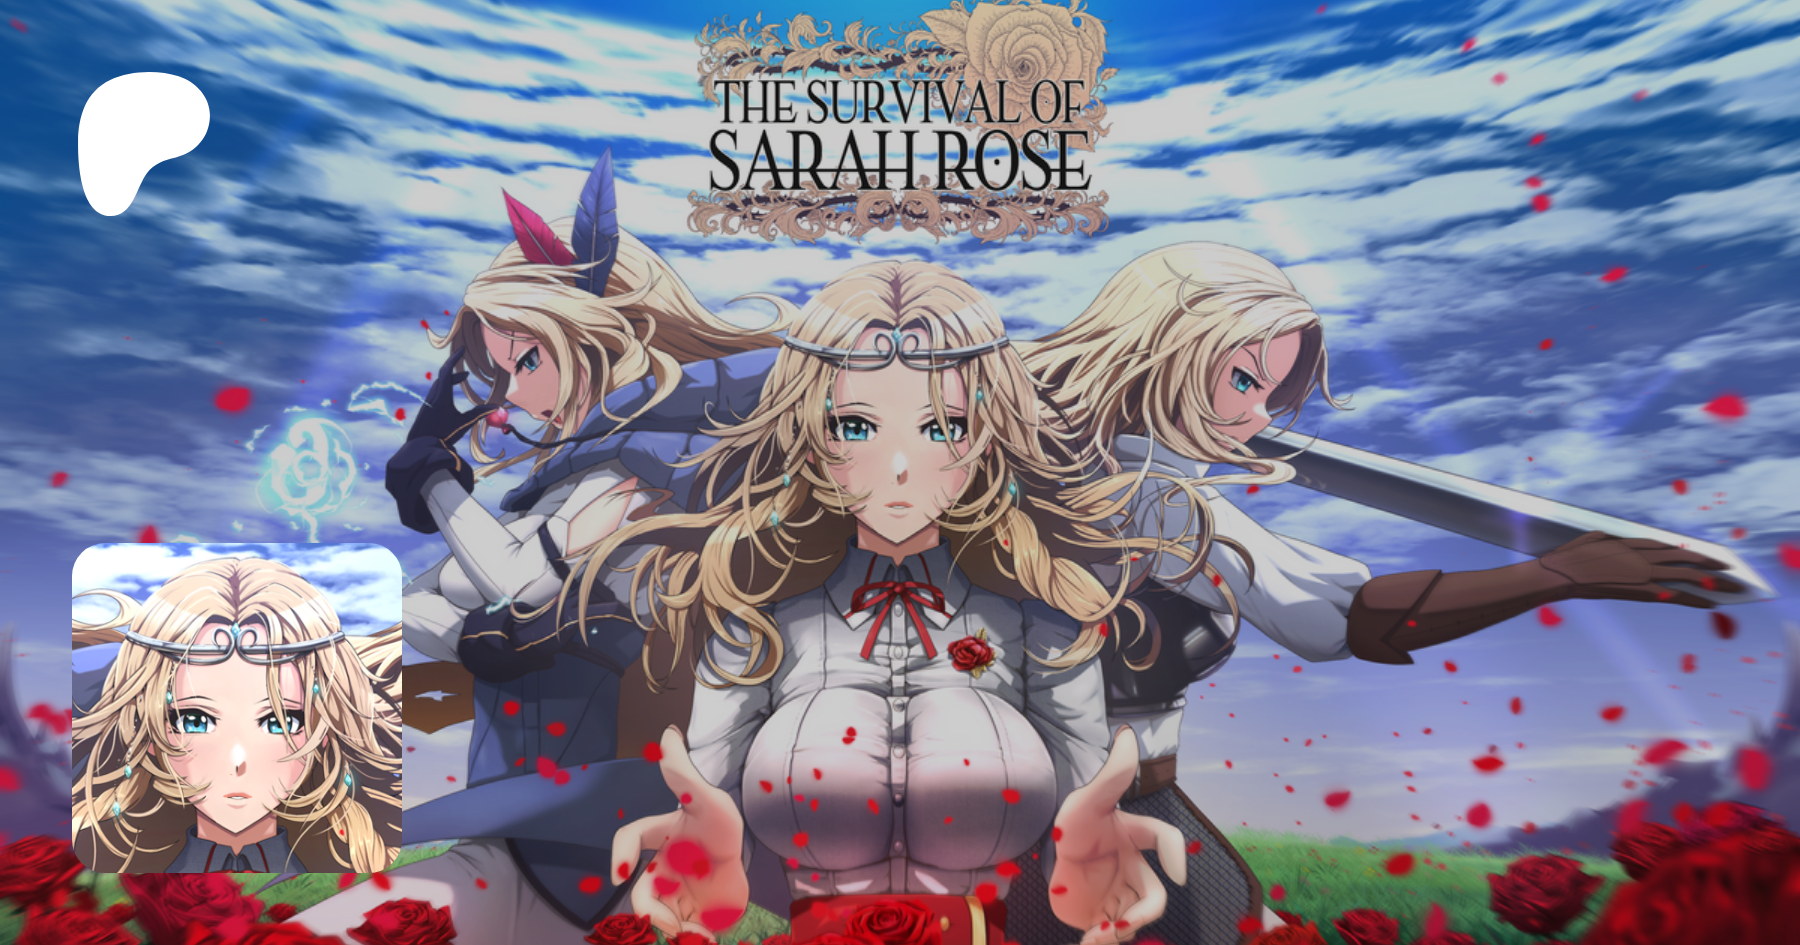 Survival of sarah rose